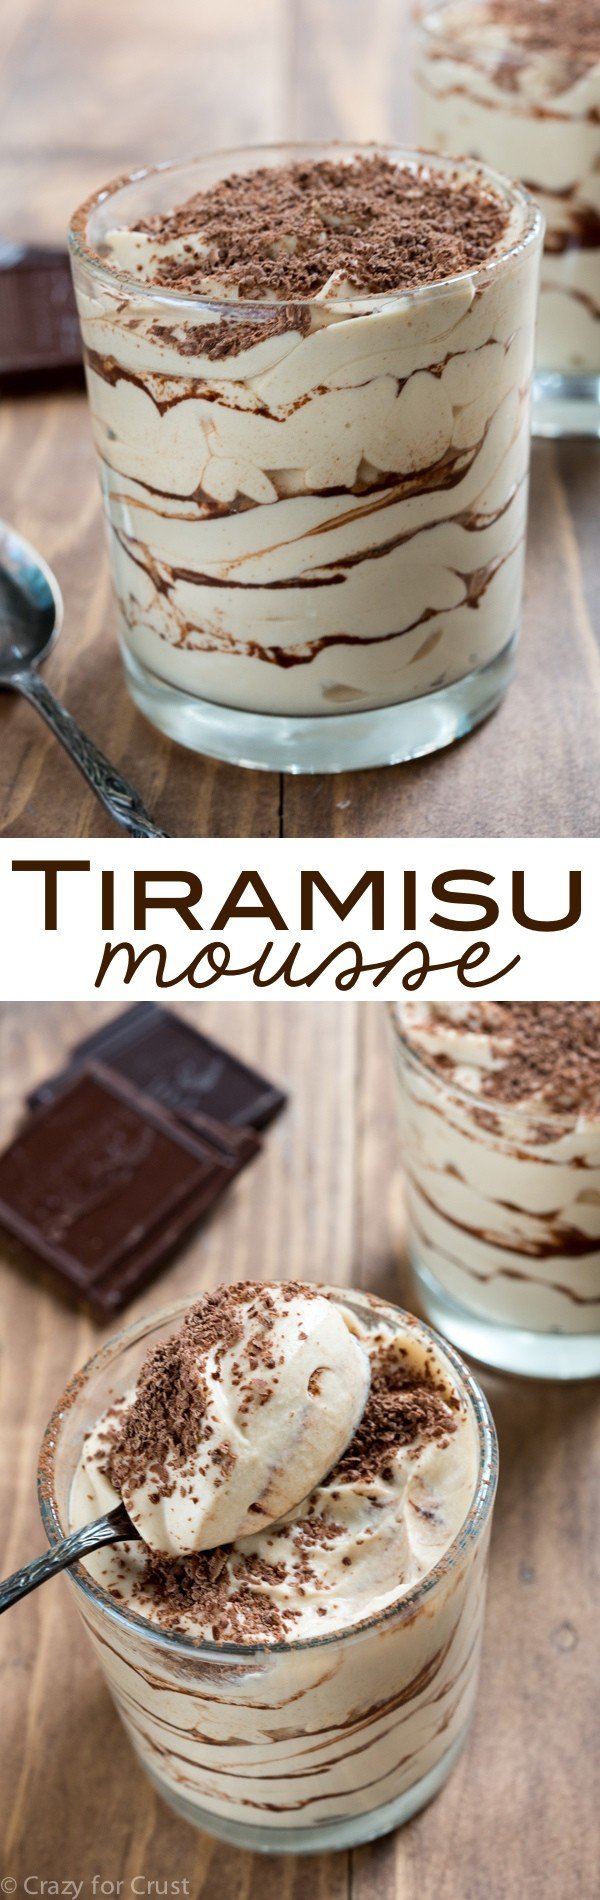 Tiramisu Mousse - an easy no-bake dessert! Layers of tiramisu whipped cream and cocoa powder for the best part of the tiramisu!